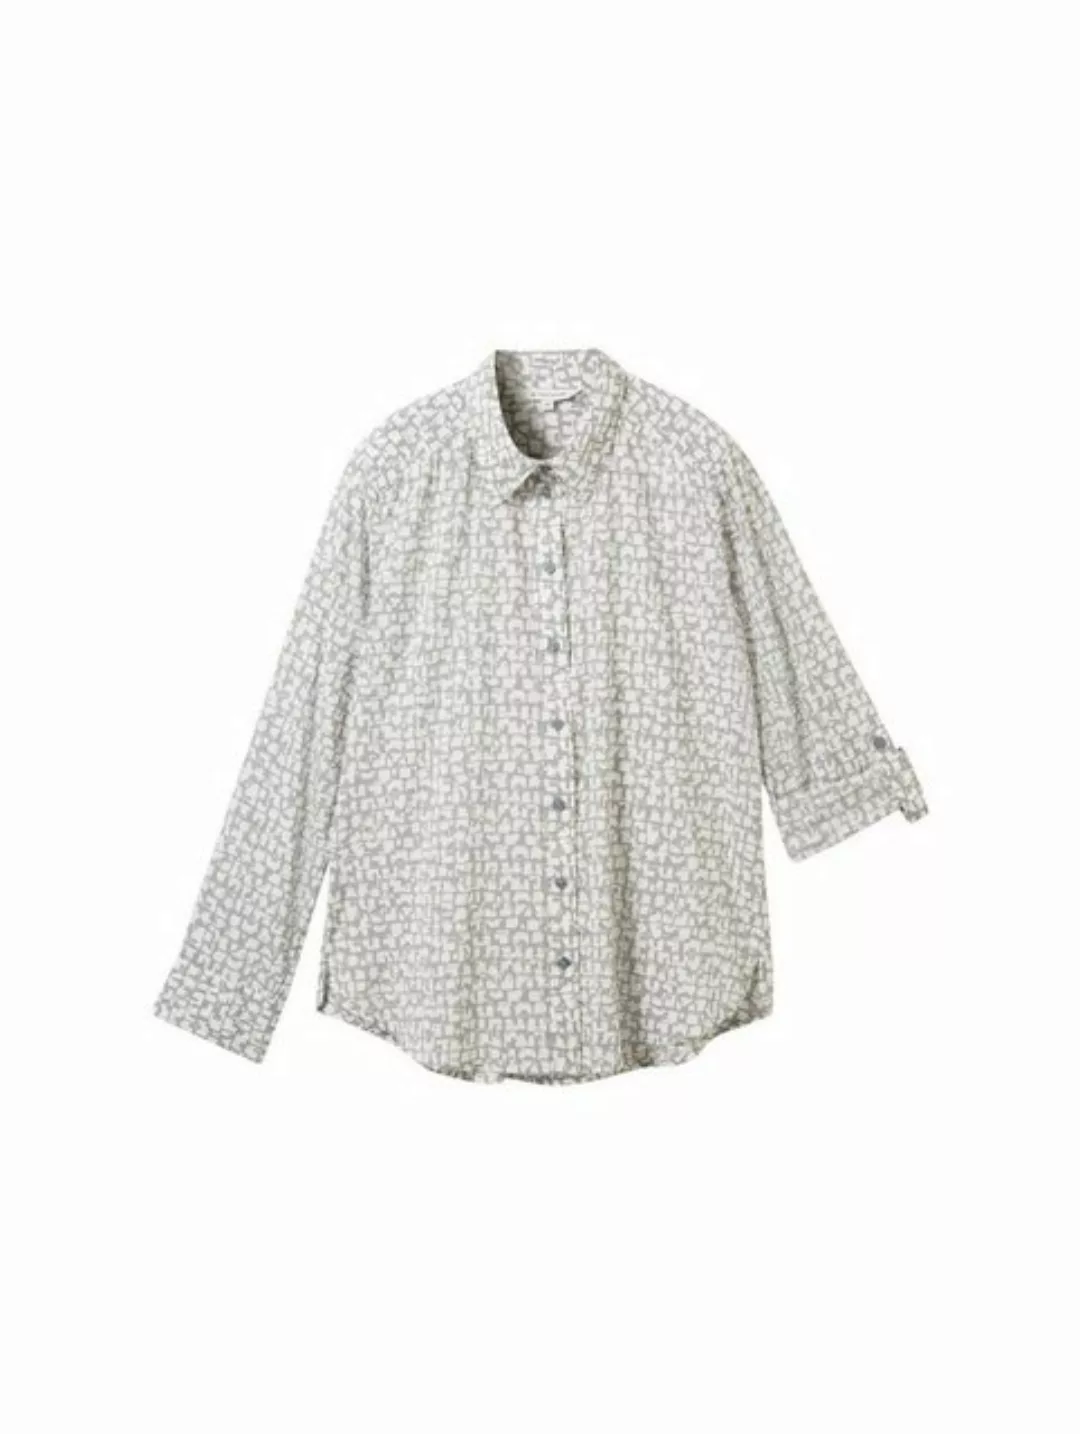 TOM TAILOR Blusenshirt printed blouse with collar, neutral tile design günstig online kaufen